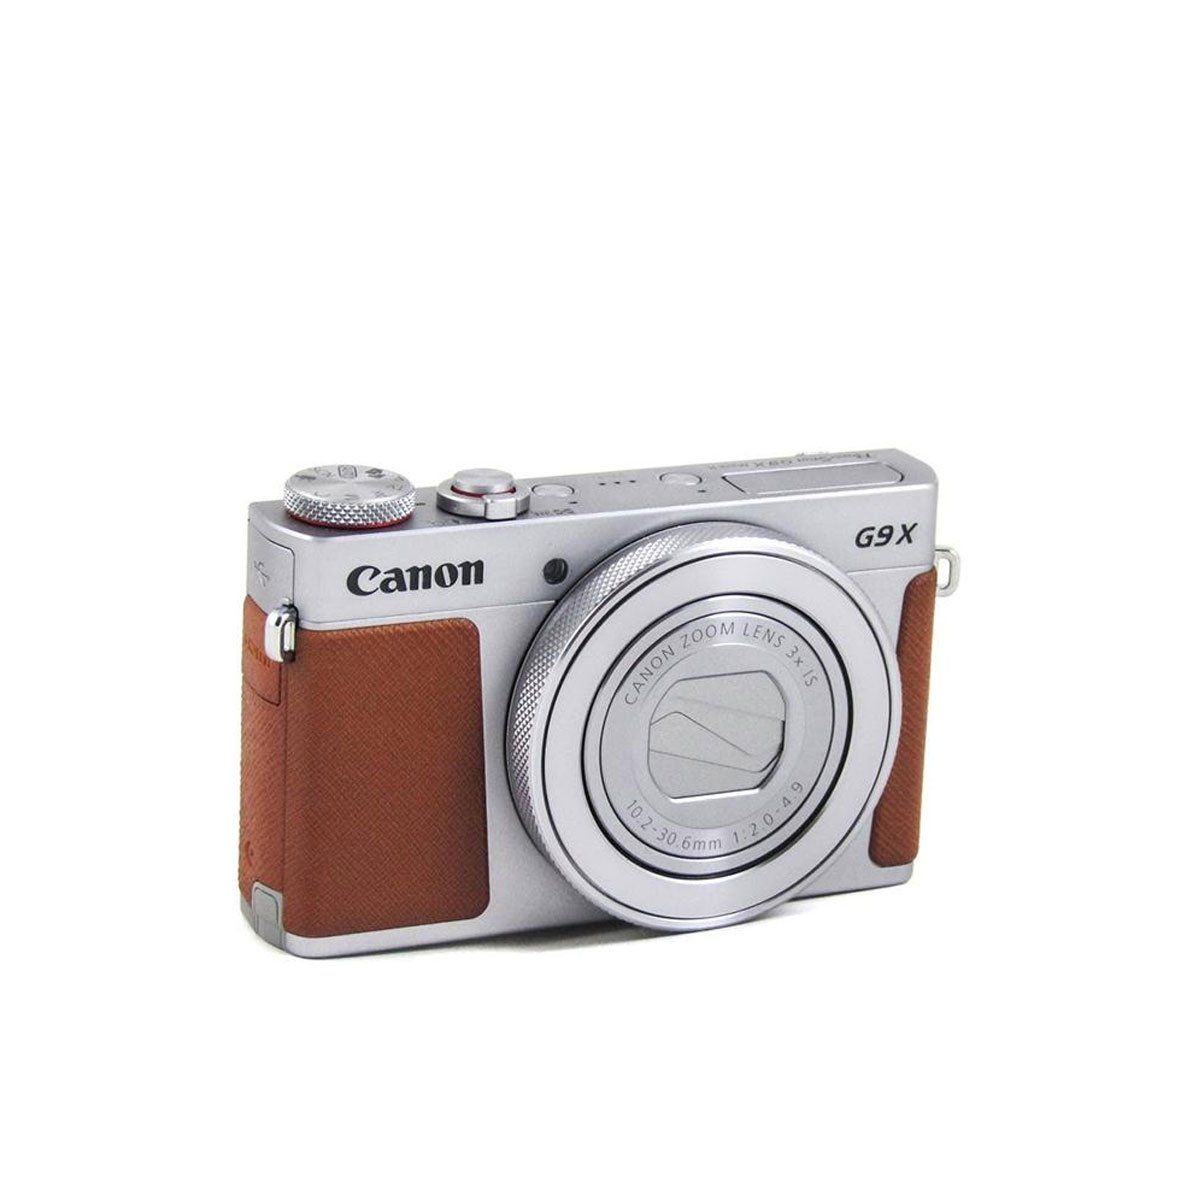  Máy ảnh Canon PowerShot G9 X Mark II 